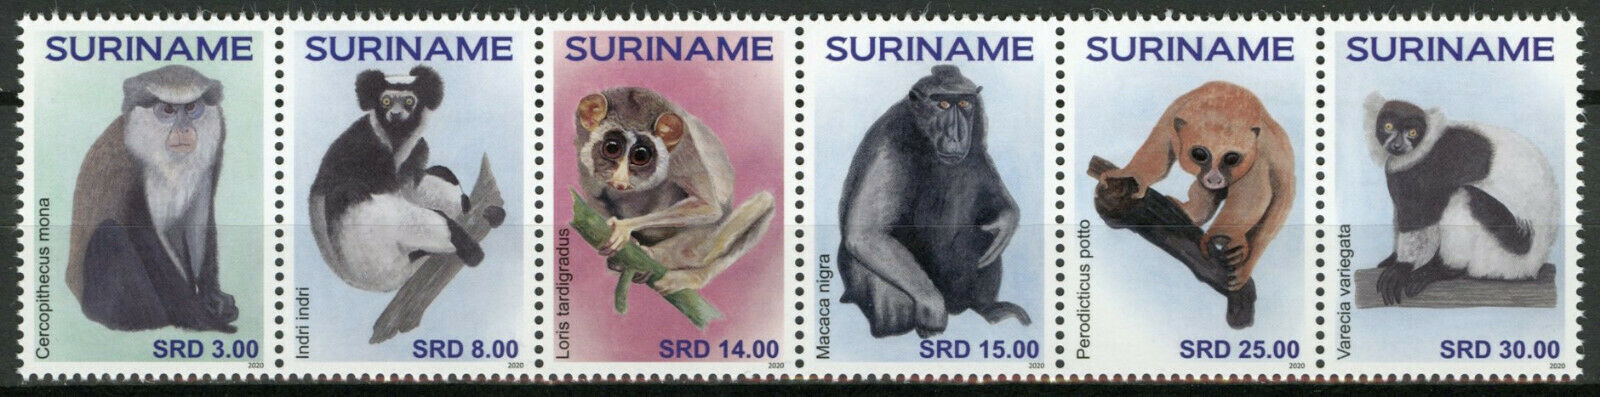 Suriname Wild Animals Stamps 2020 MNH Monkeys Primates Macaques Fauna 6v Strip